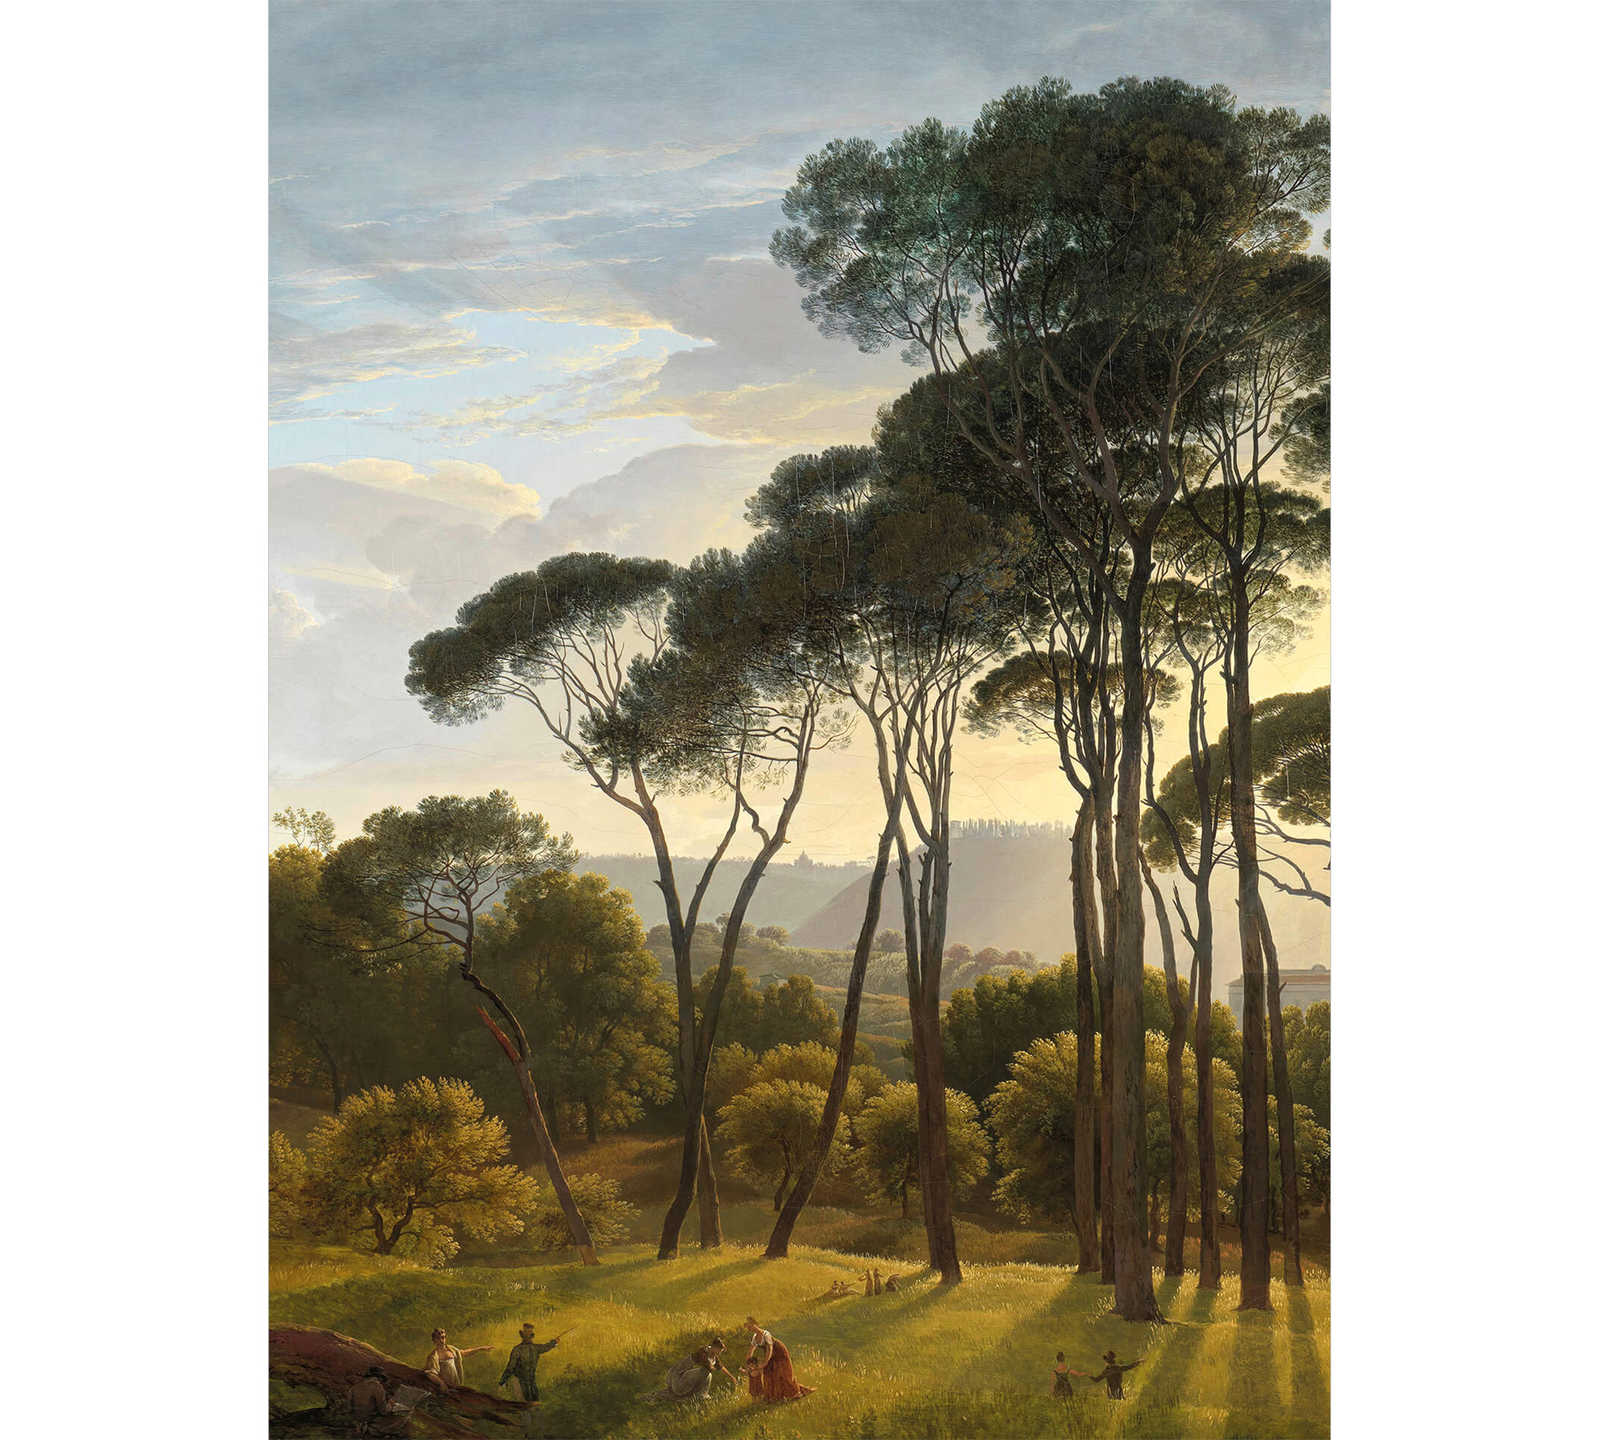 Fototapete Landschaft mit Bäumen – Grün, Braun, Grau
